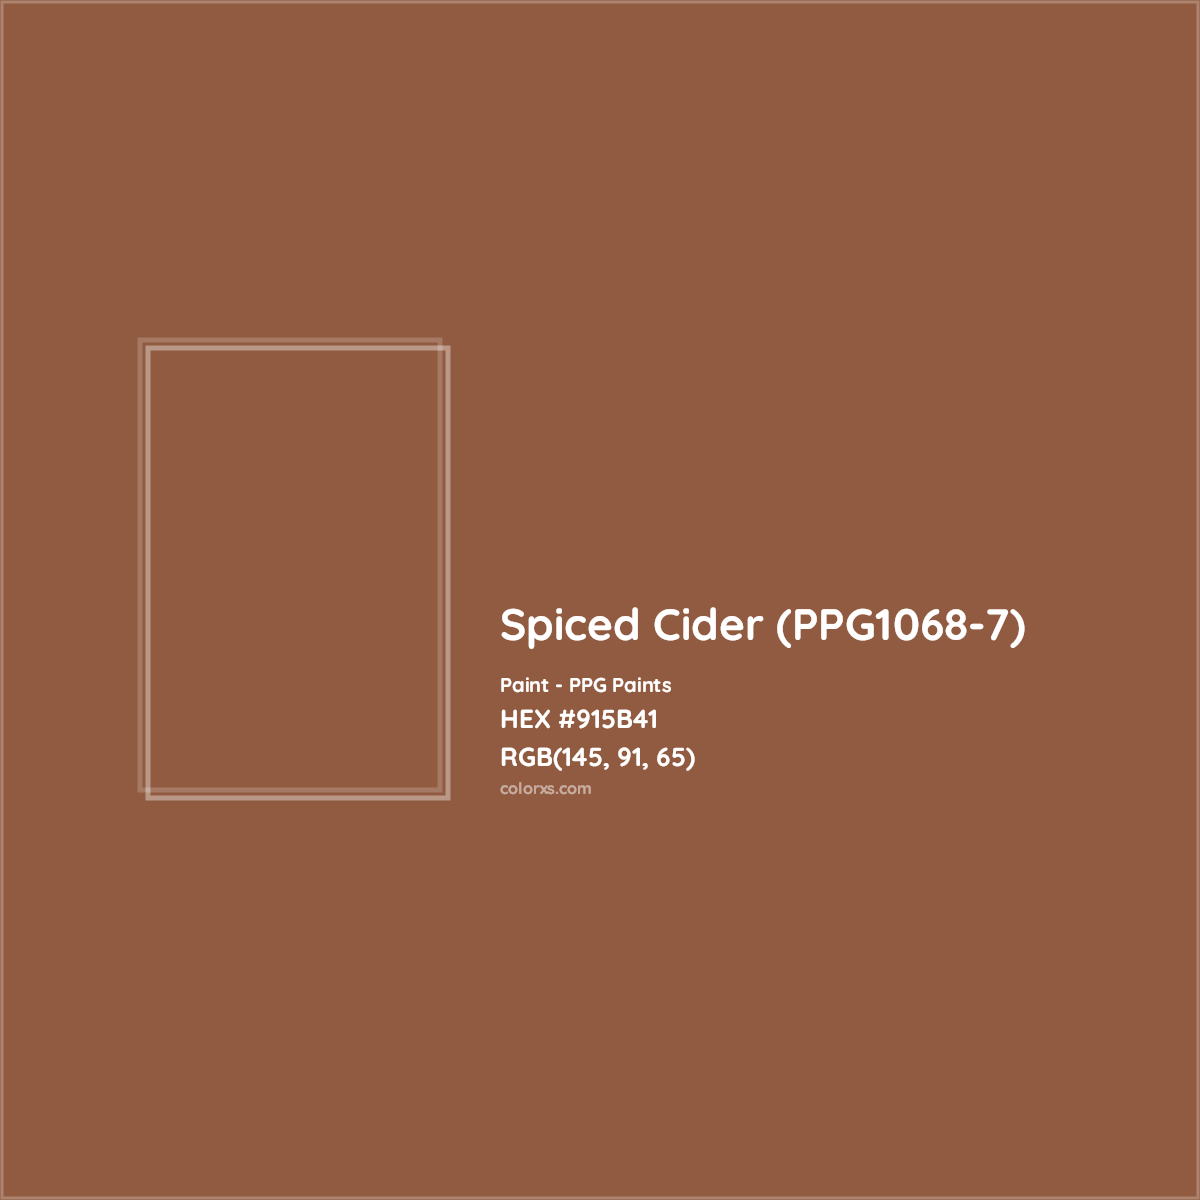 HEX #915B41 Spiced Cider (PPG1068-7) Paint PPG Paints - Color Code